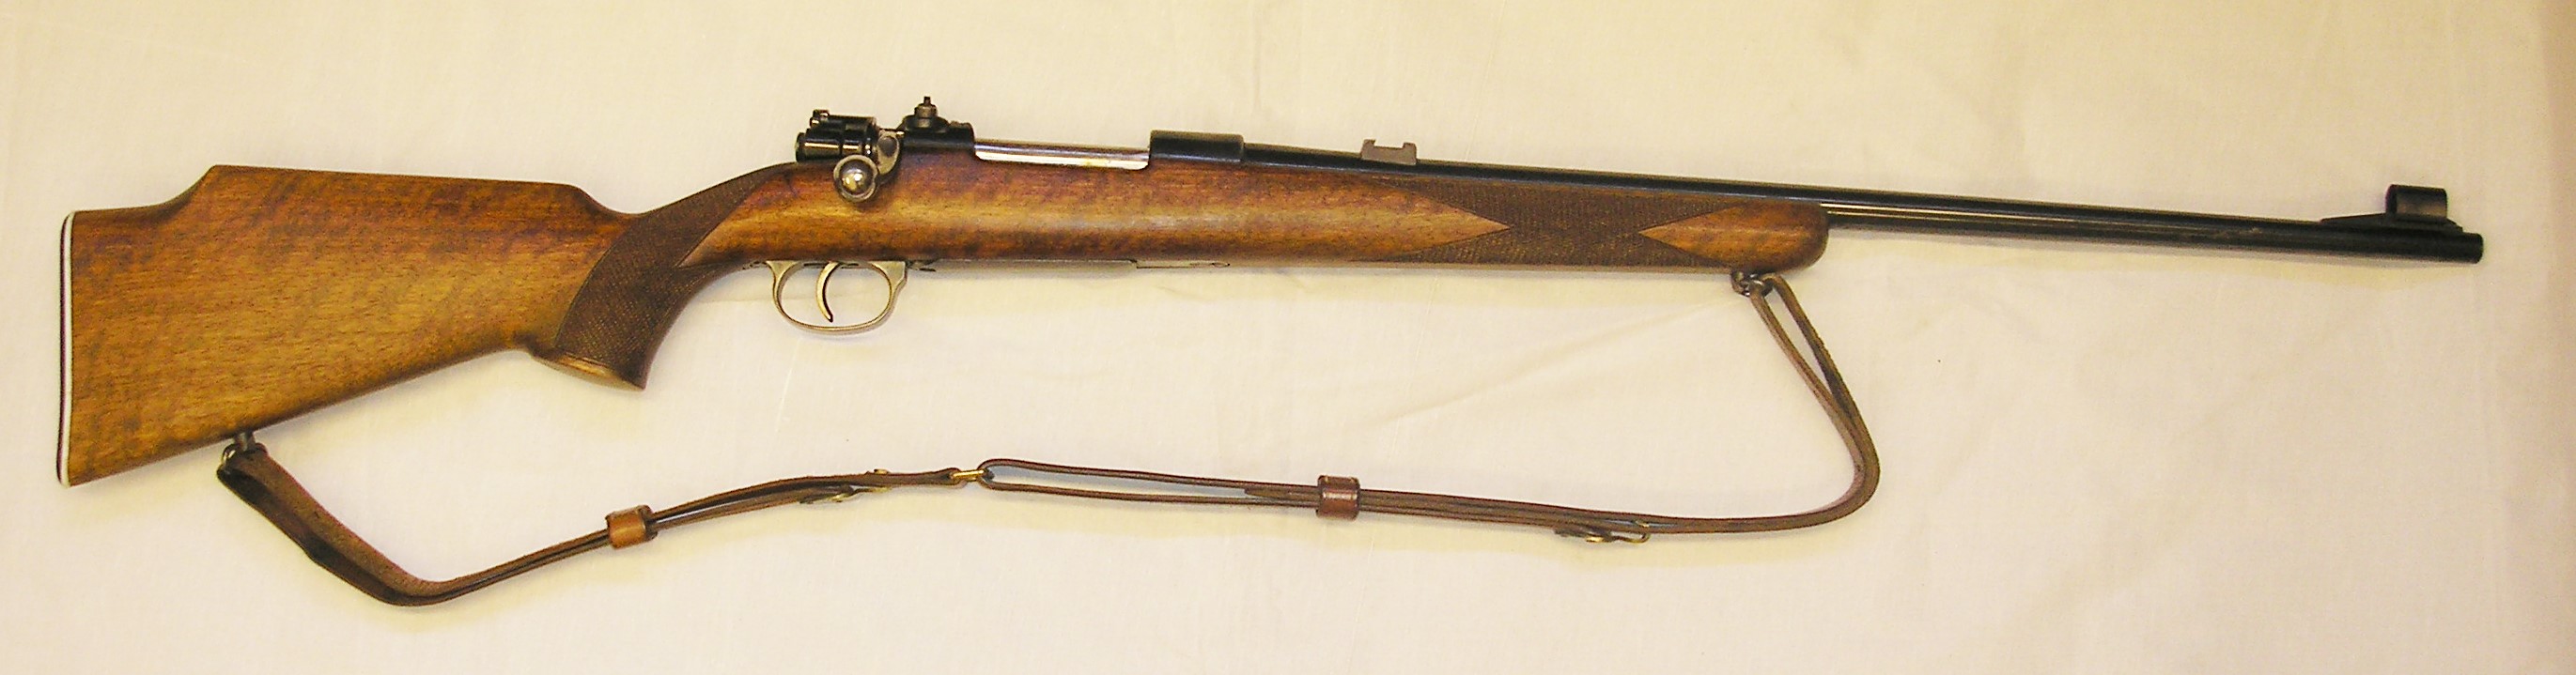 ./guns/rifle/bilder/Rifle-Kongsberg-Mauser-M62-1468-1.JPG